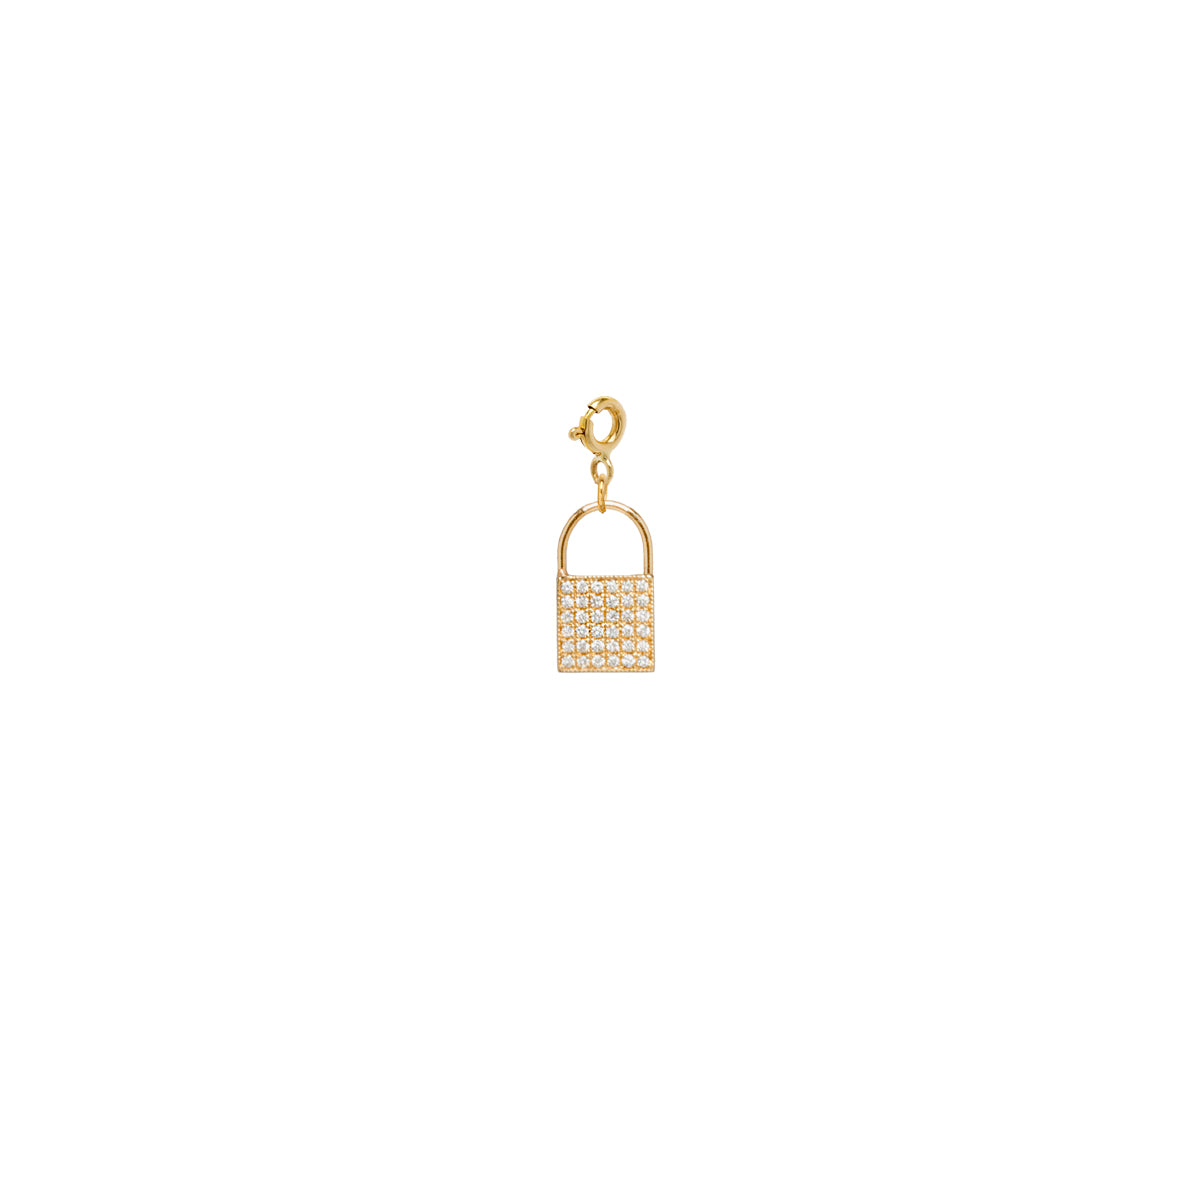 Zoe Chicco 14K Gold Padlock Charm with Diamonds — Etc